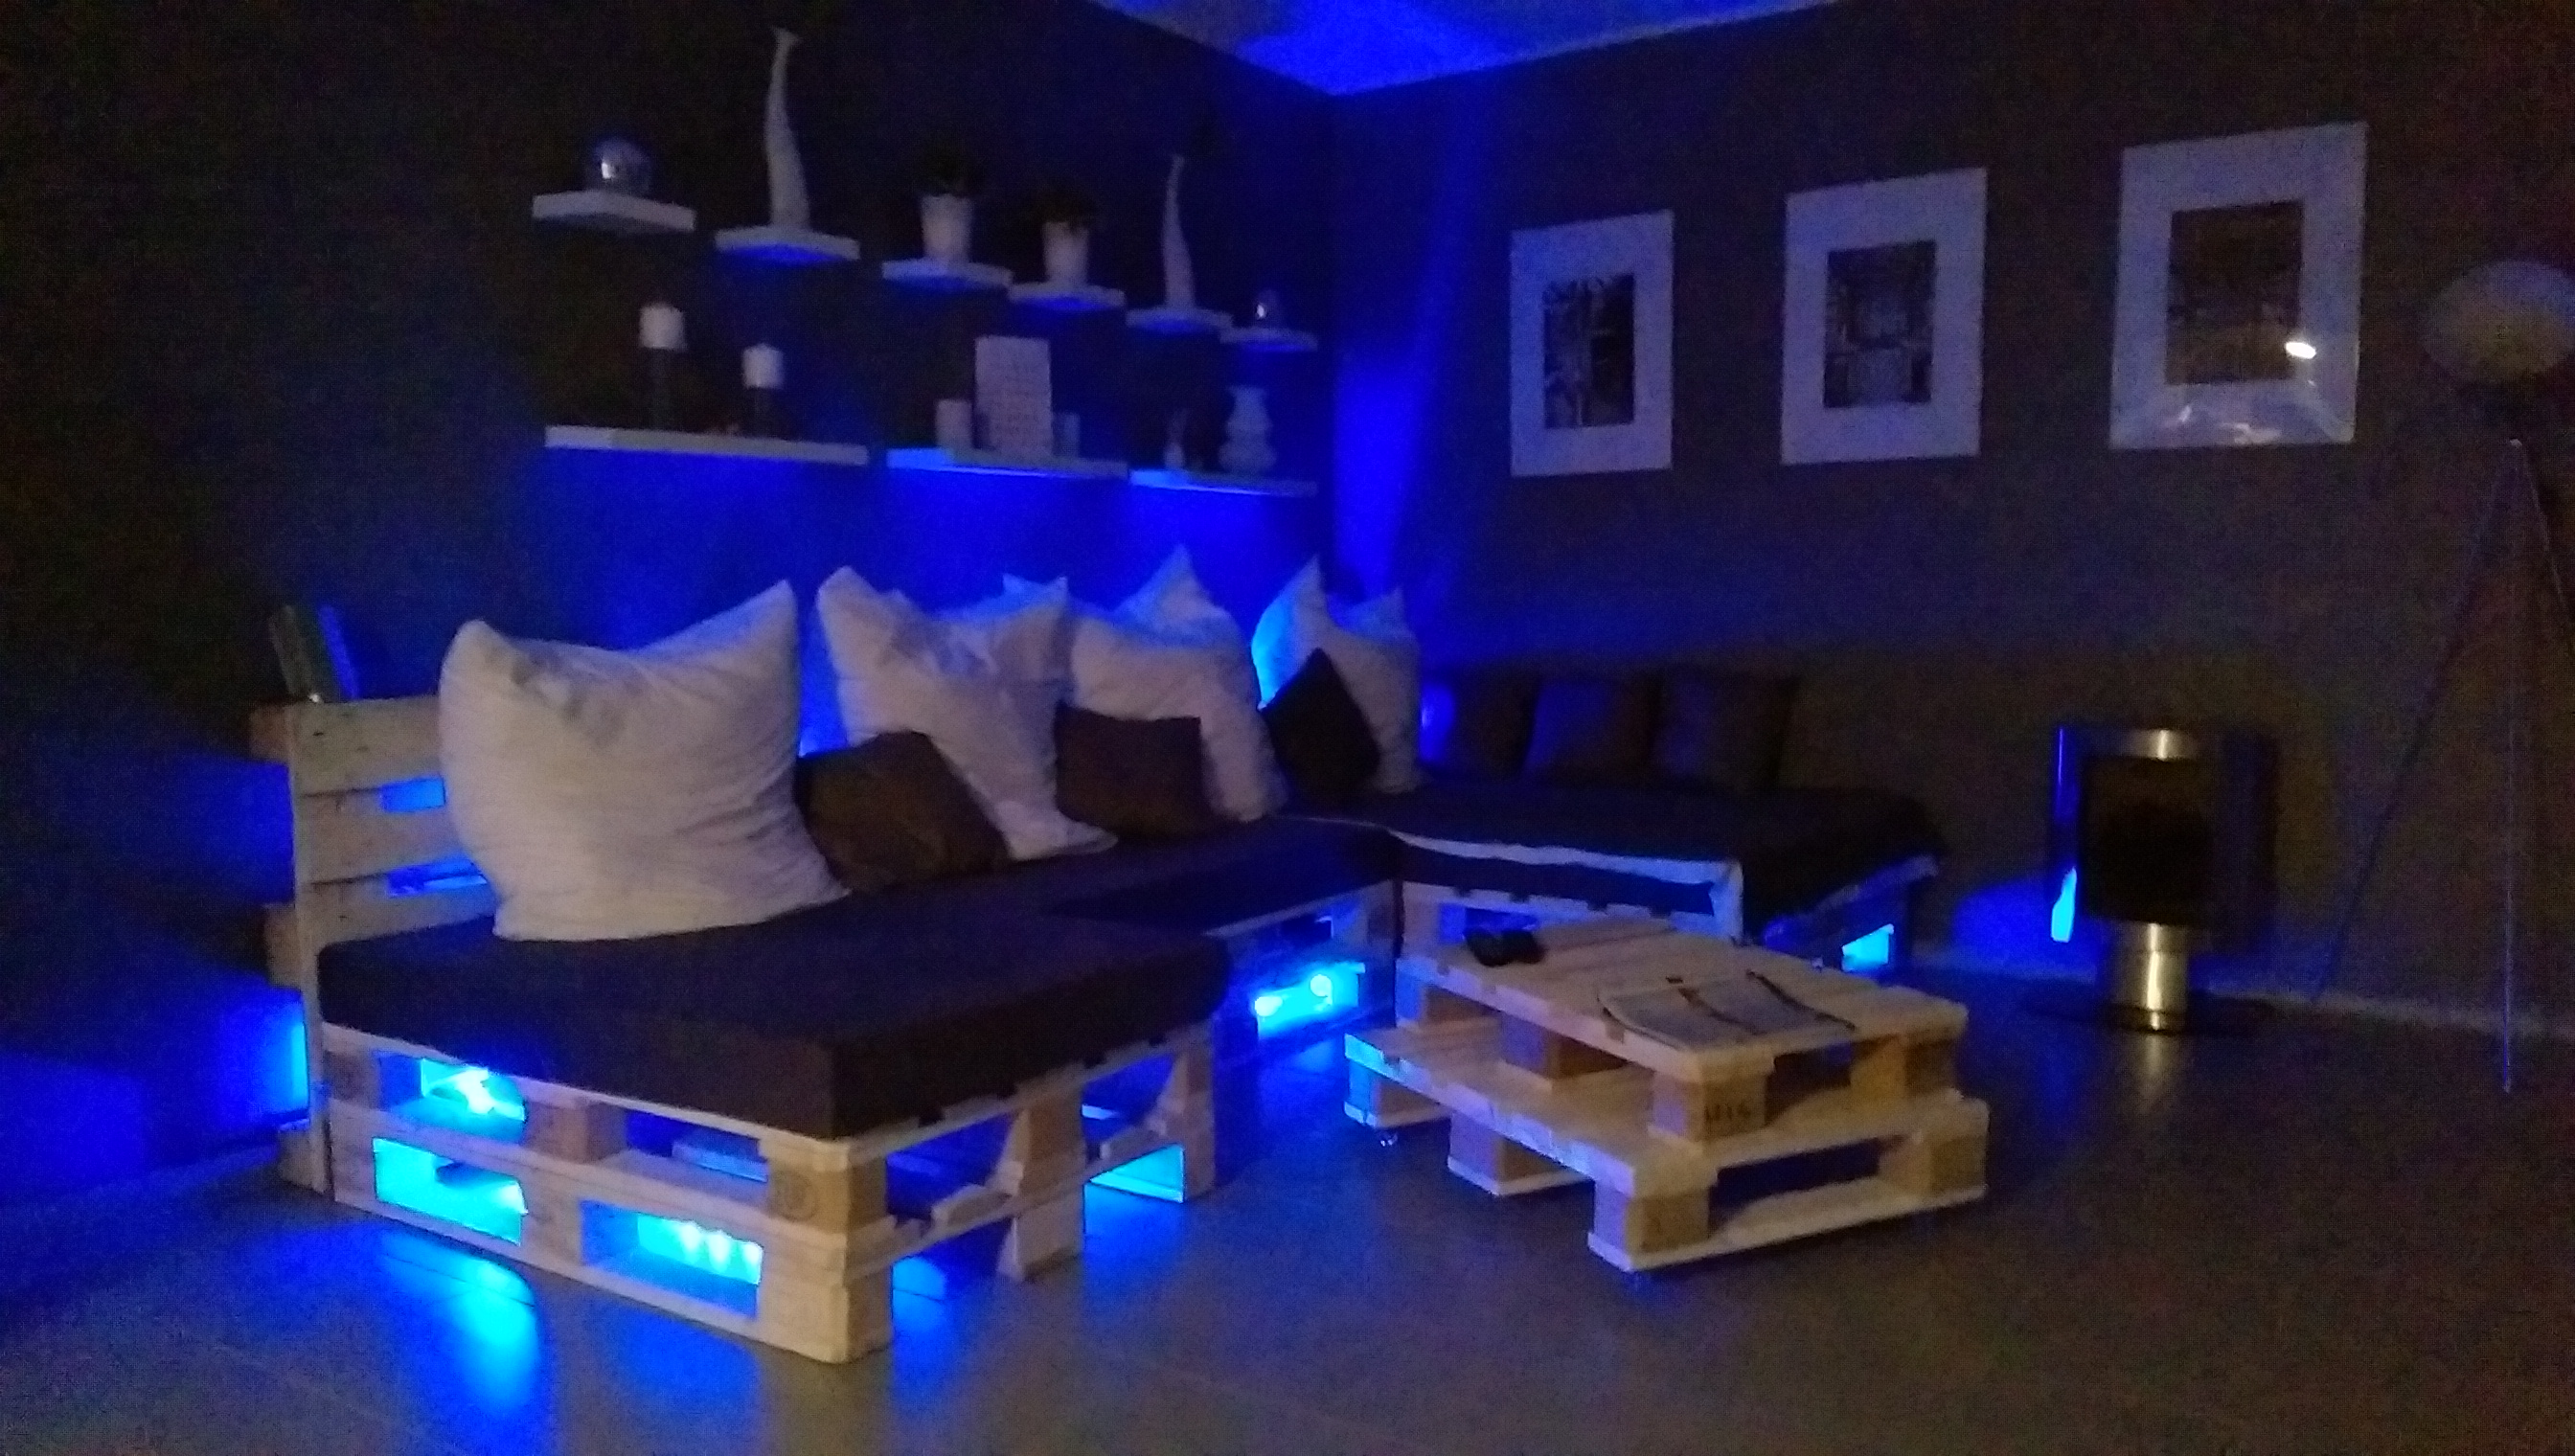 Lampu biru menghiasi perabot diy sofa pallet putih dan kusyen hitam